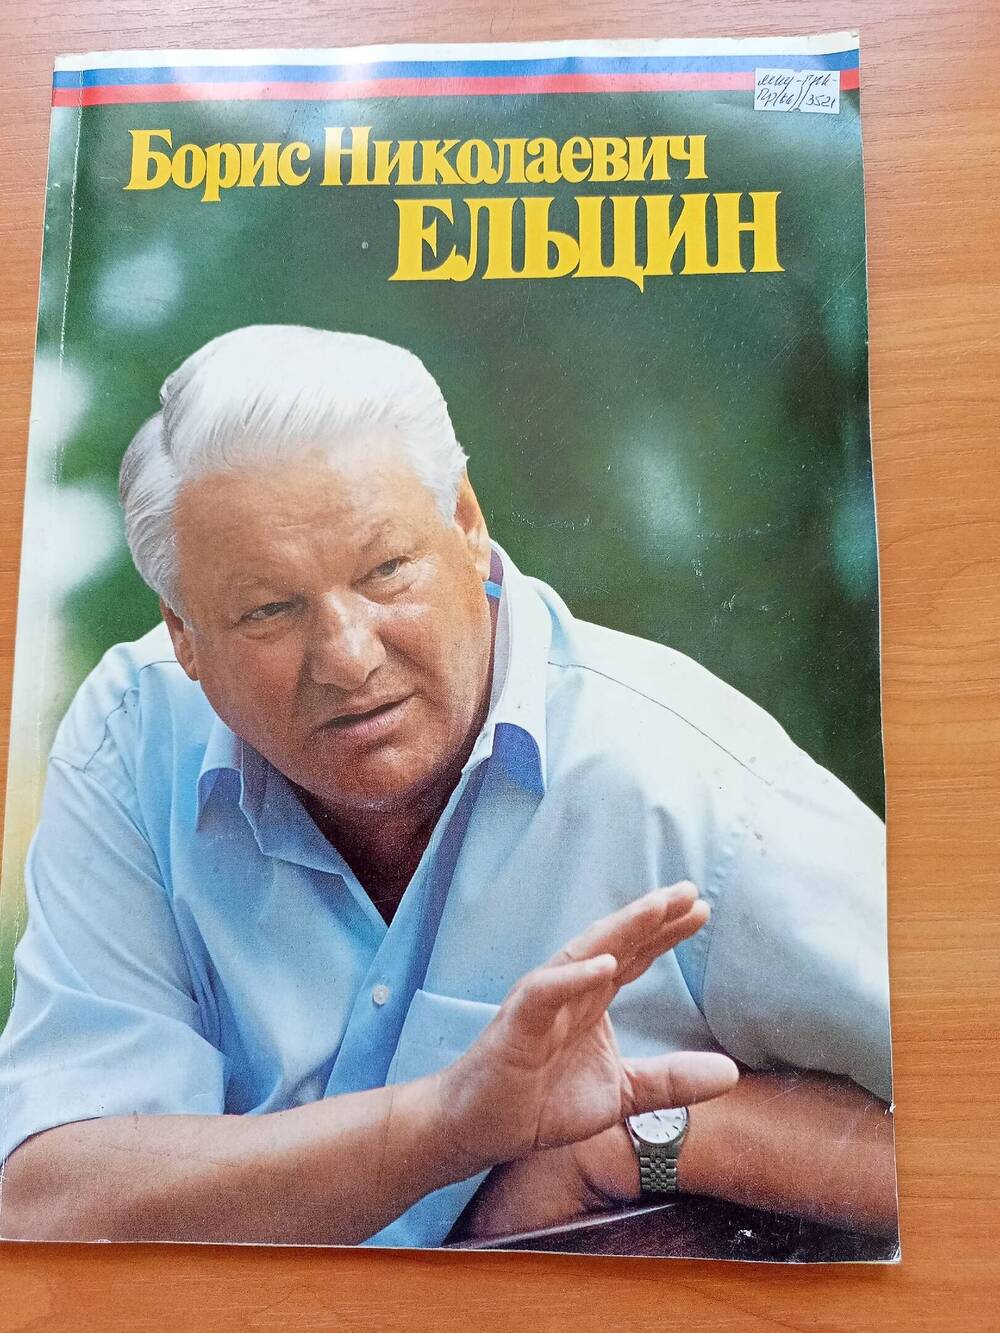 Борис Николаевич Ельцин.